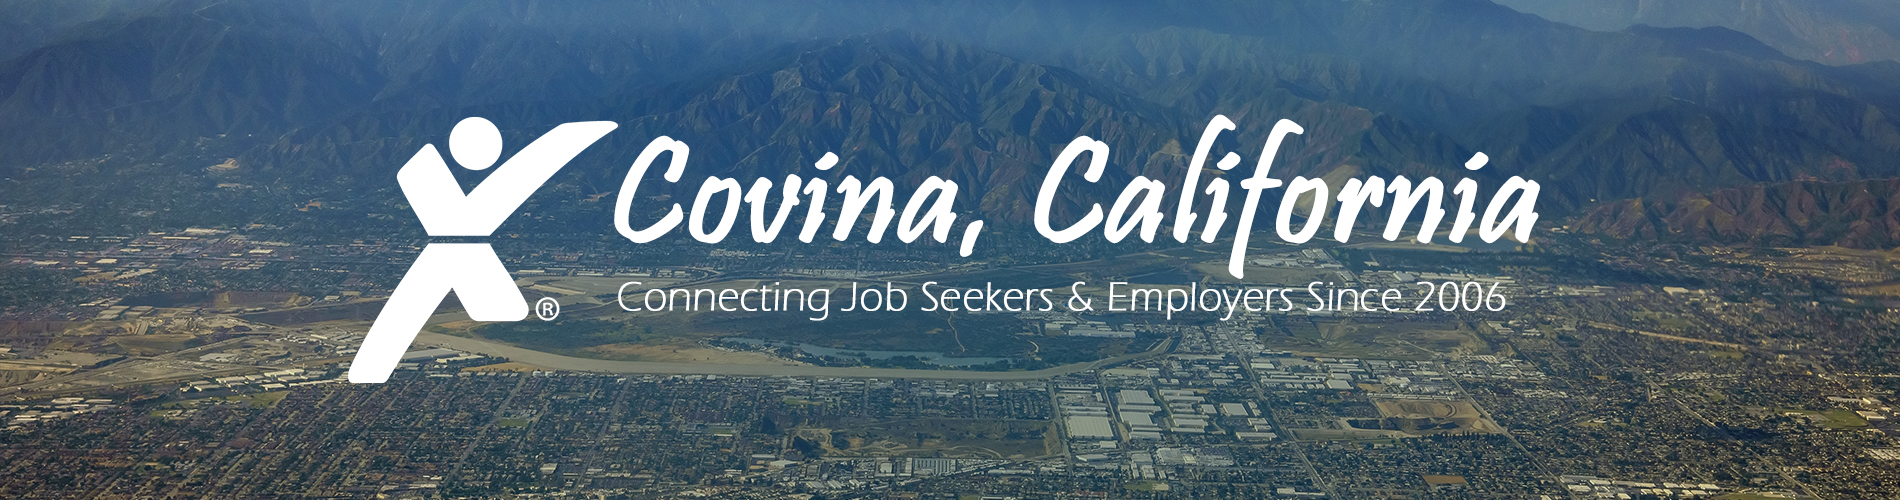 Express Employment Professionals of Covina, California